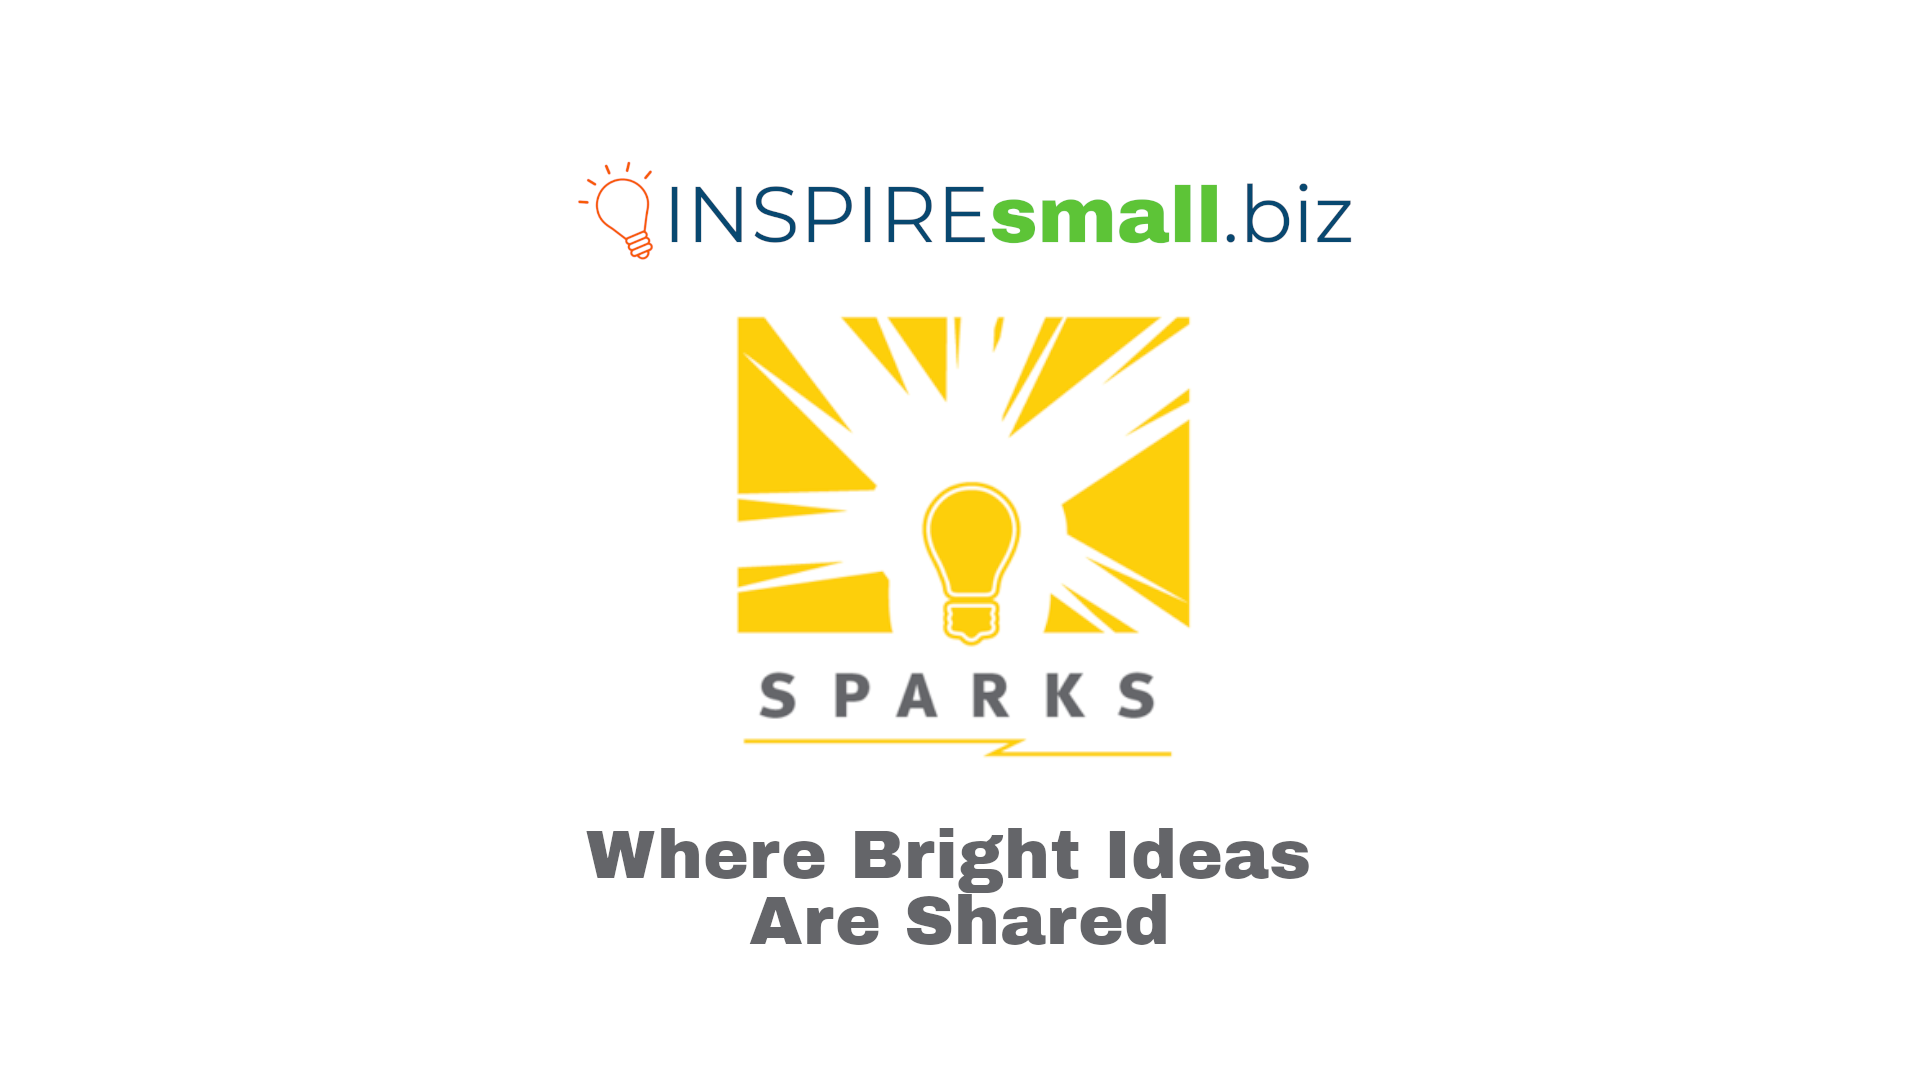 INSPIREsmall.biz SPARKS Where Bright Ideas Are Shared